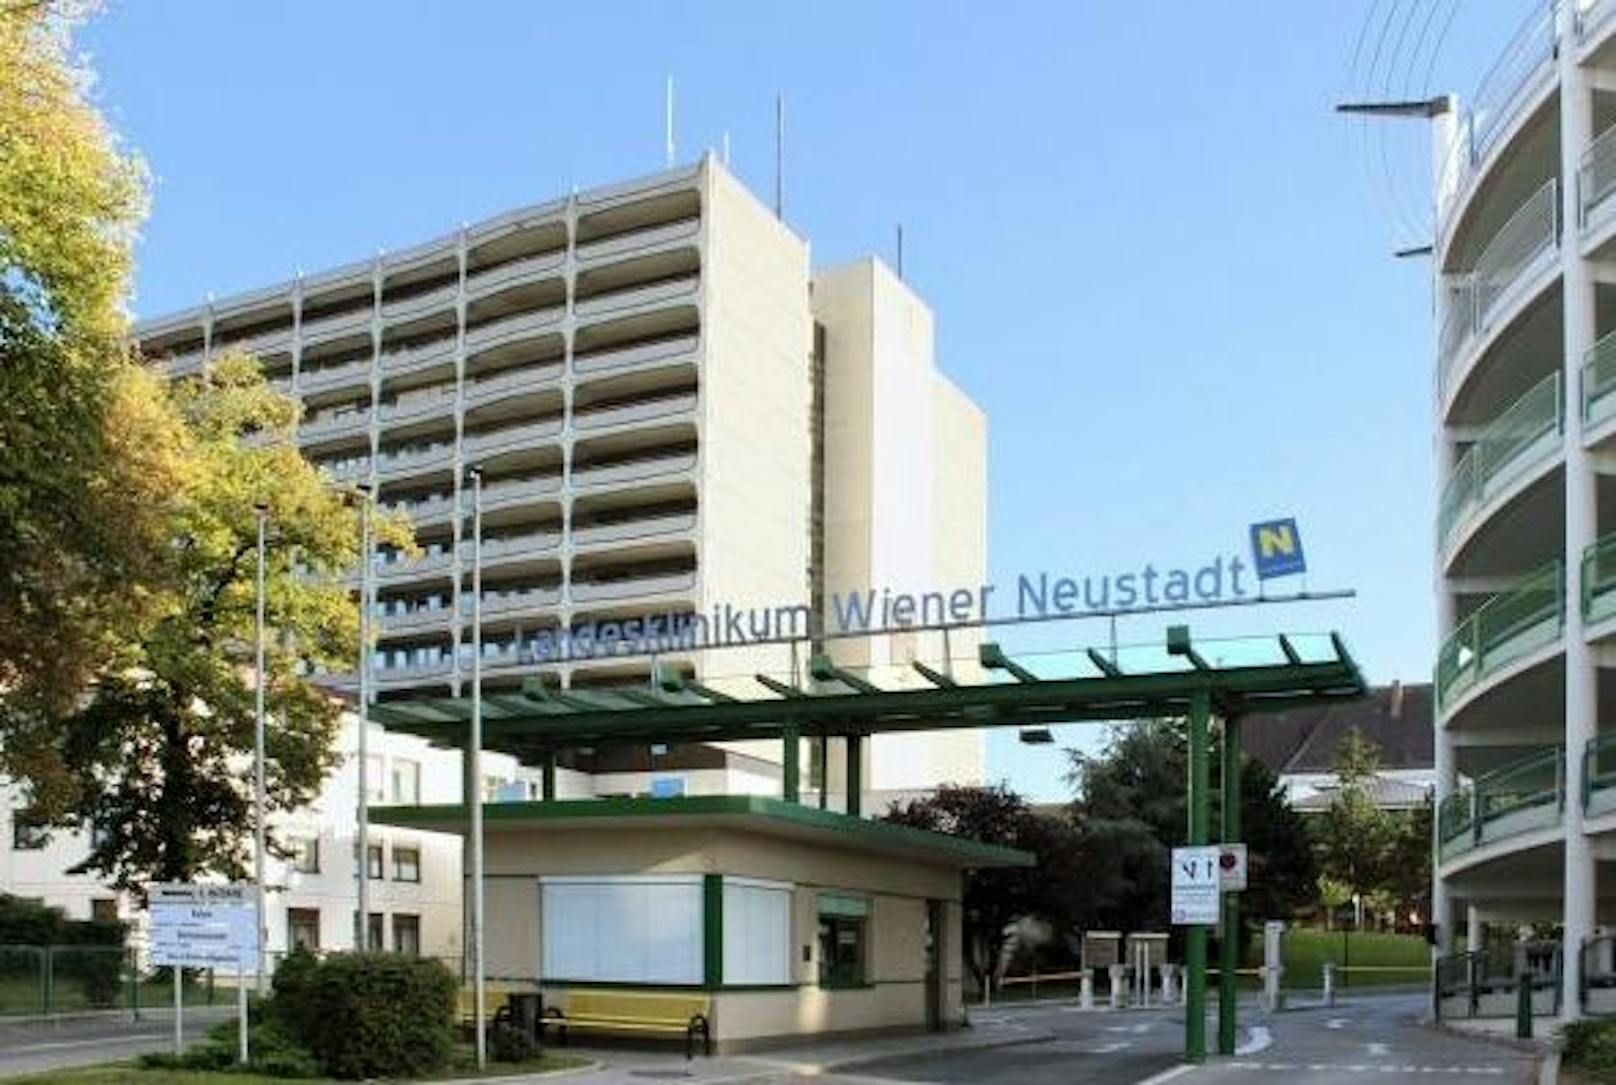 Spital in Wr. Neustadt.